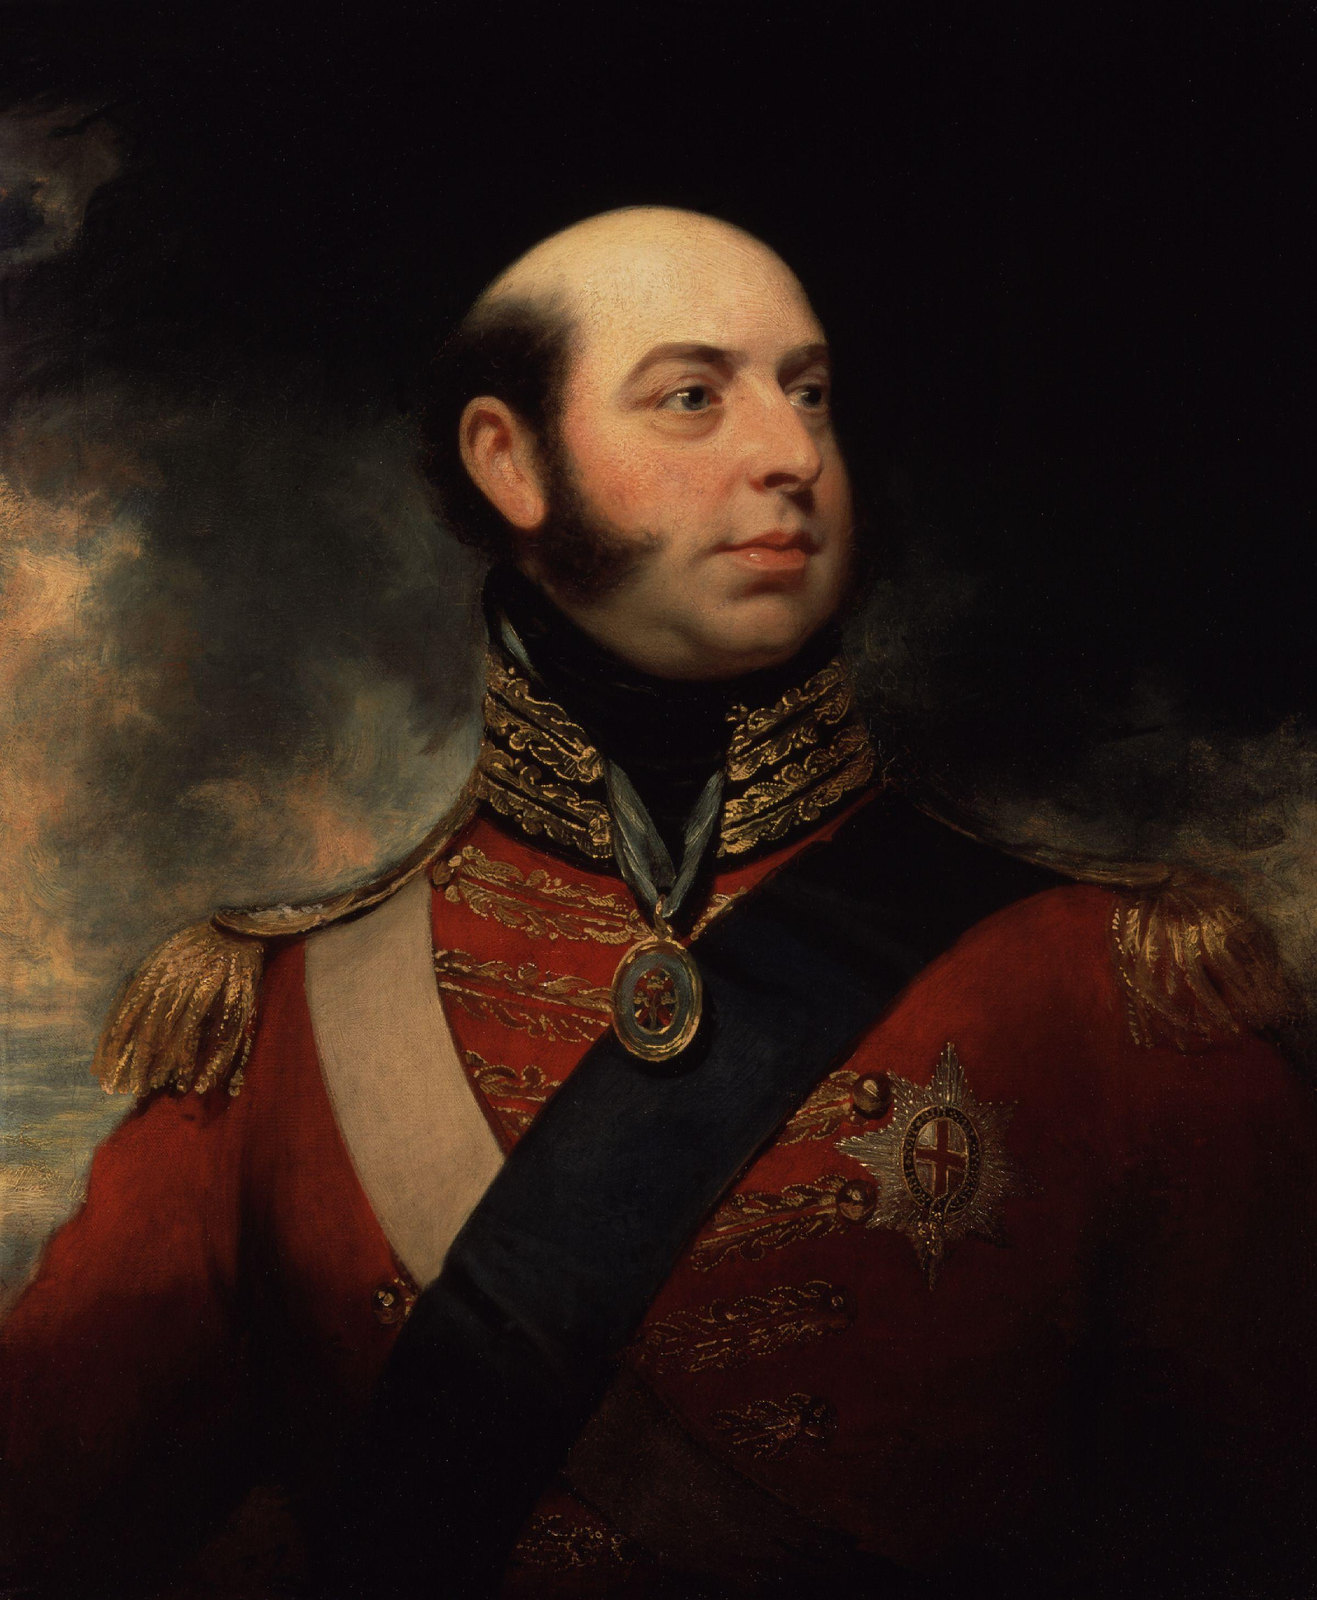 Edward, Duke of Kent and Strathearn bu William Beechey, 1818